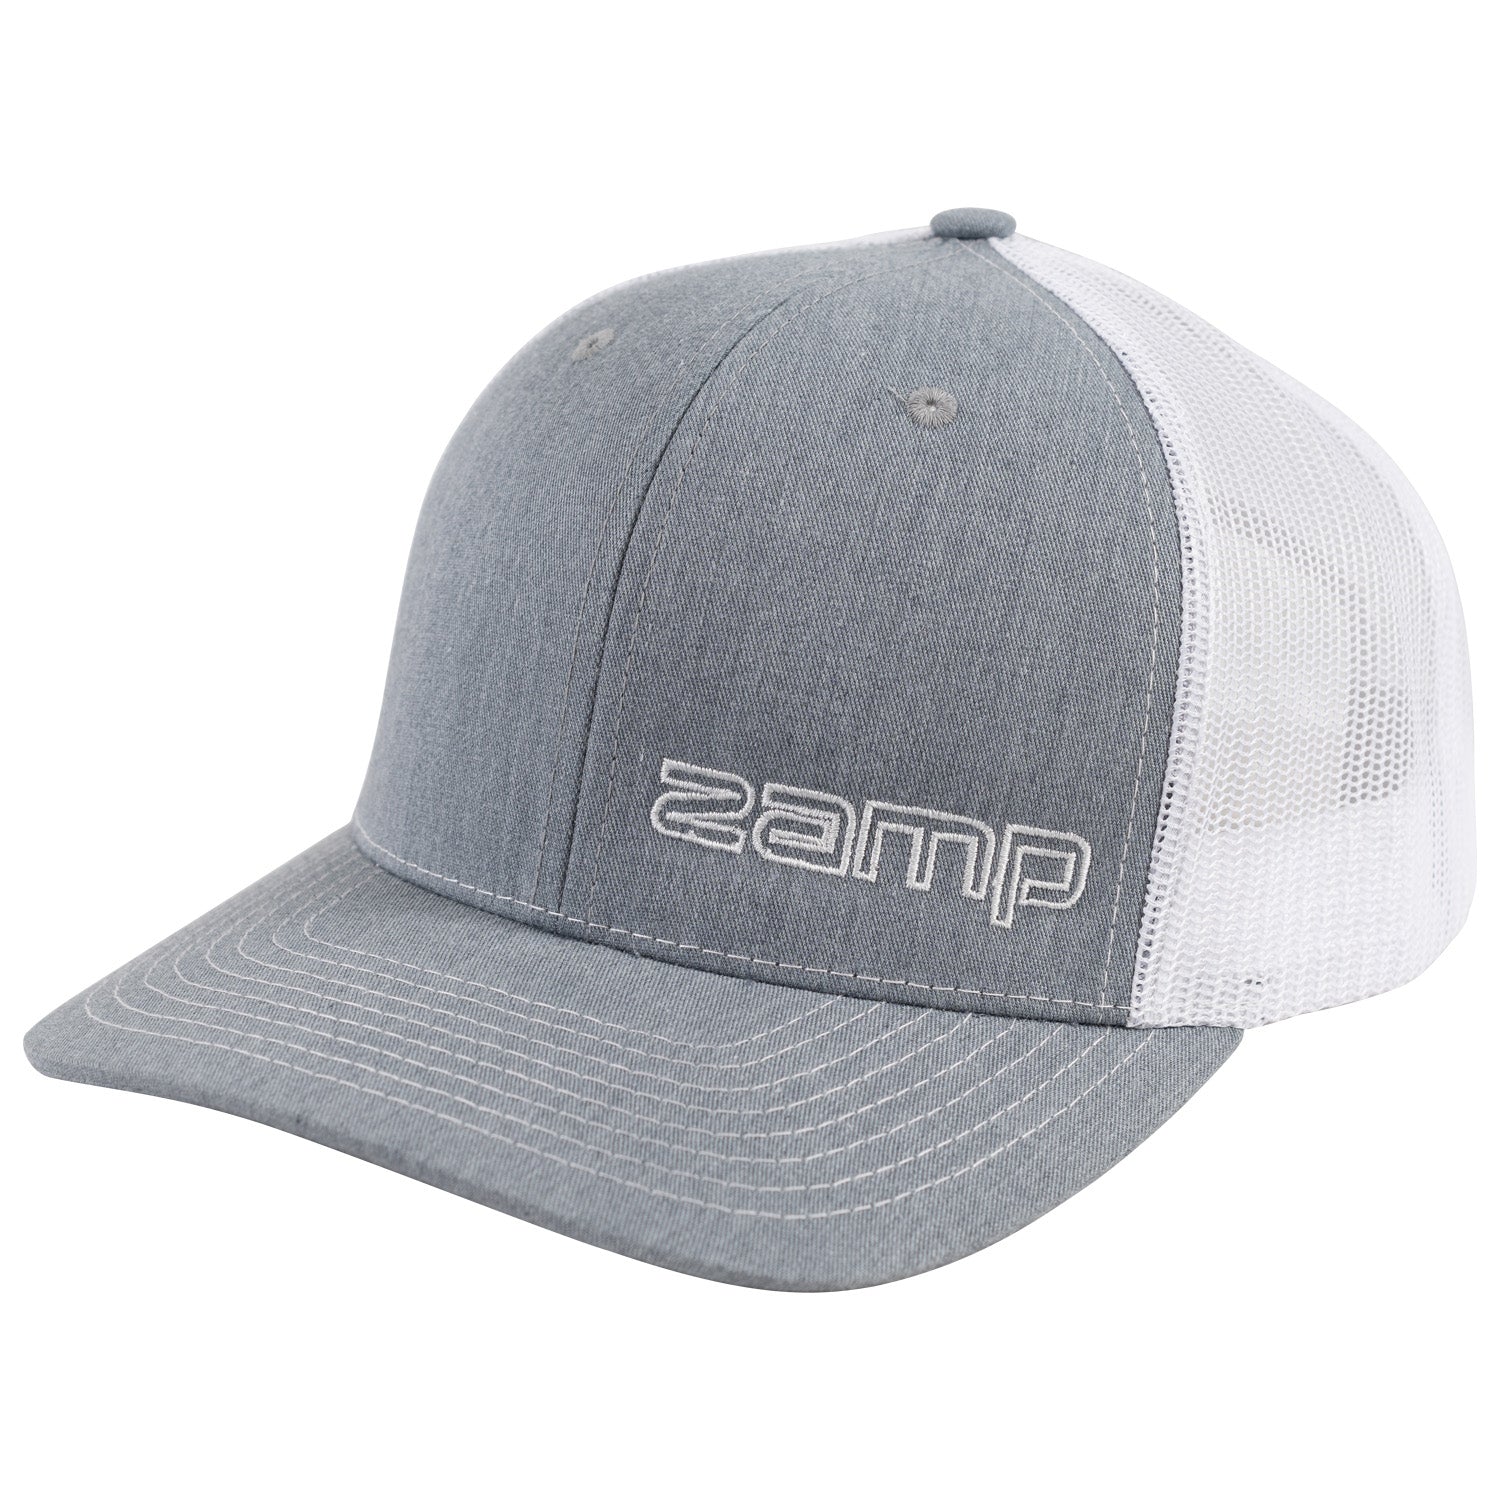 ZAMP Racing Hat Gray/White N004001